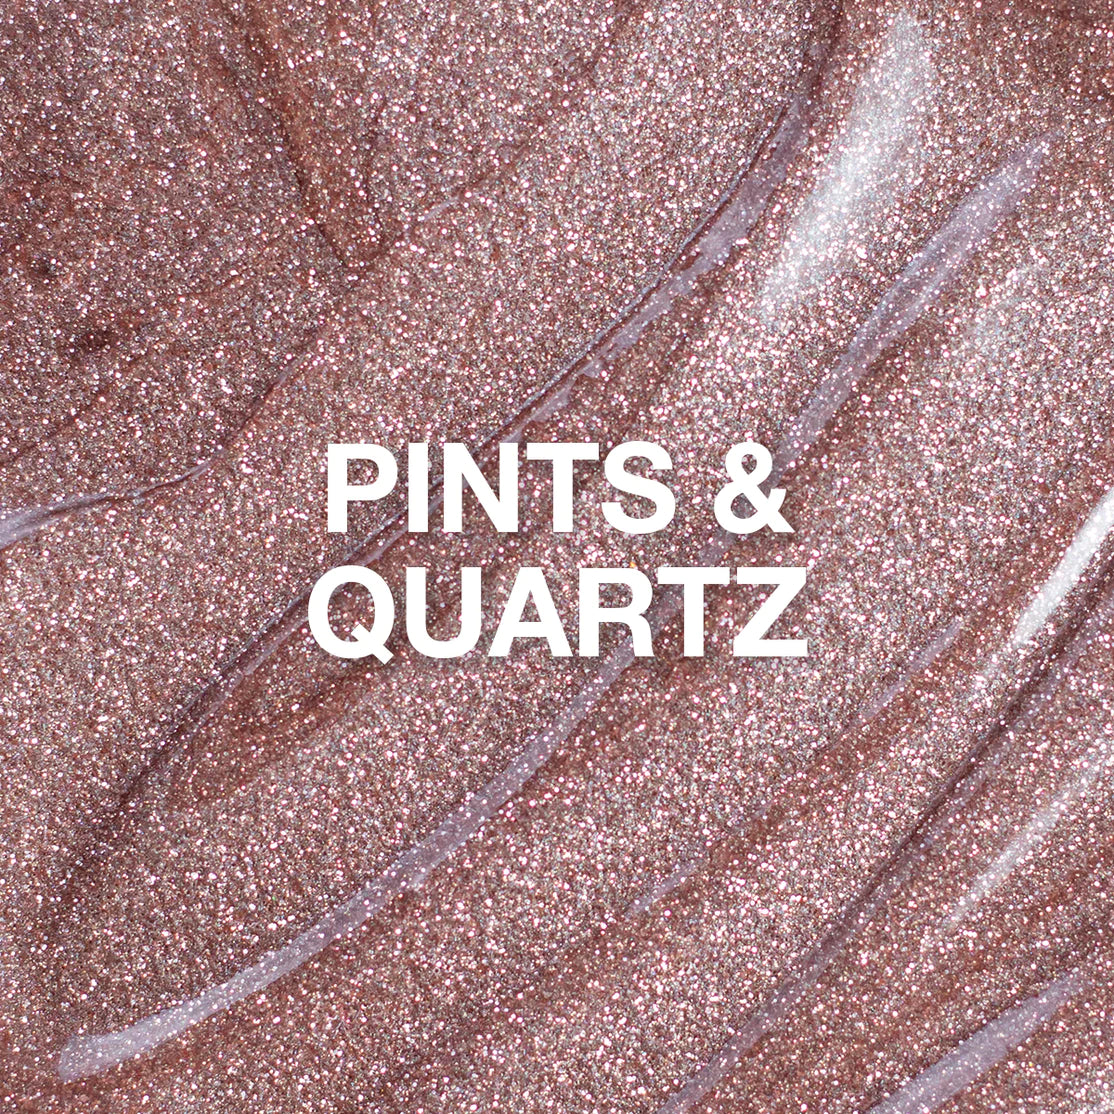 P+ Clean Slate Glitter Gel Polish 10 ml — Light Elegance